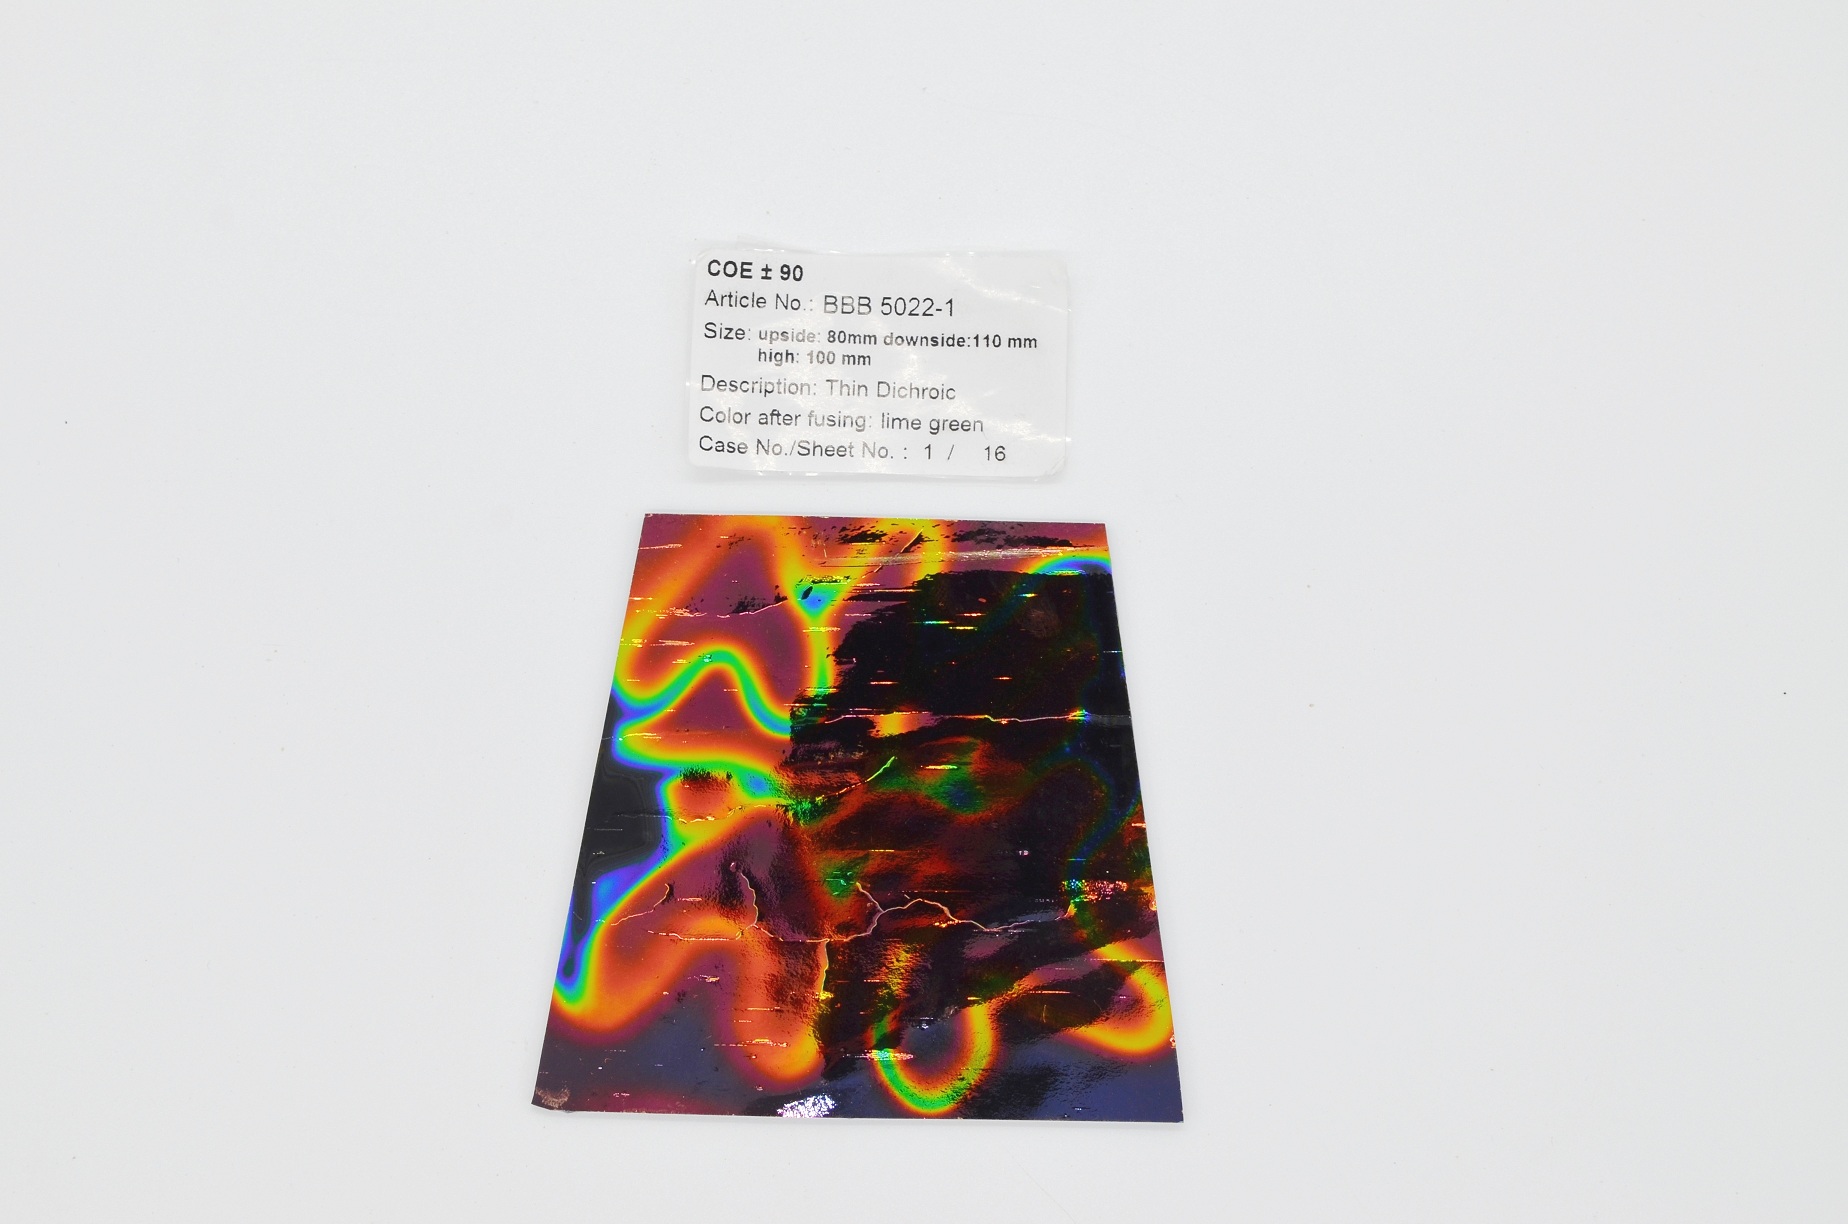 Baoli dünn dichroic auf schwarz, Regenbogen Form KOE 90, 1mm